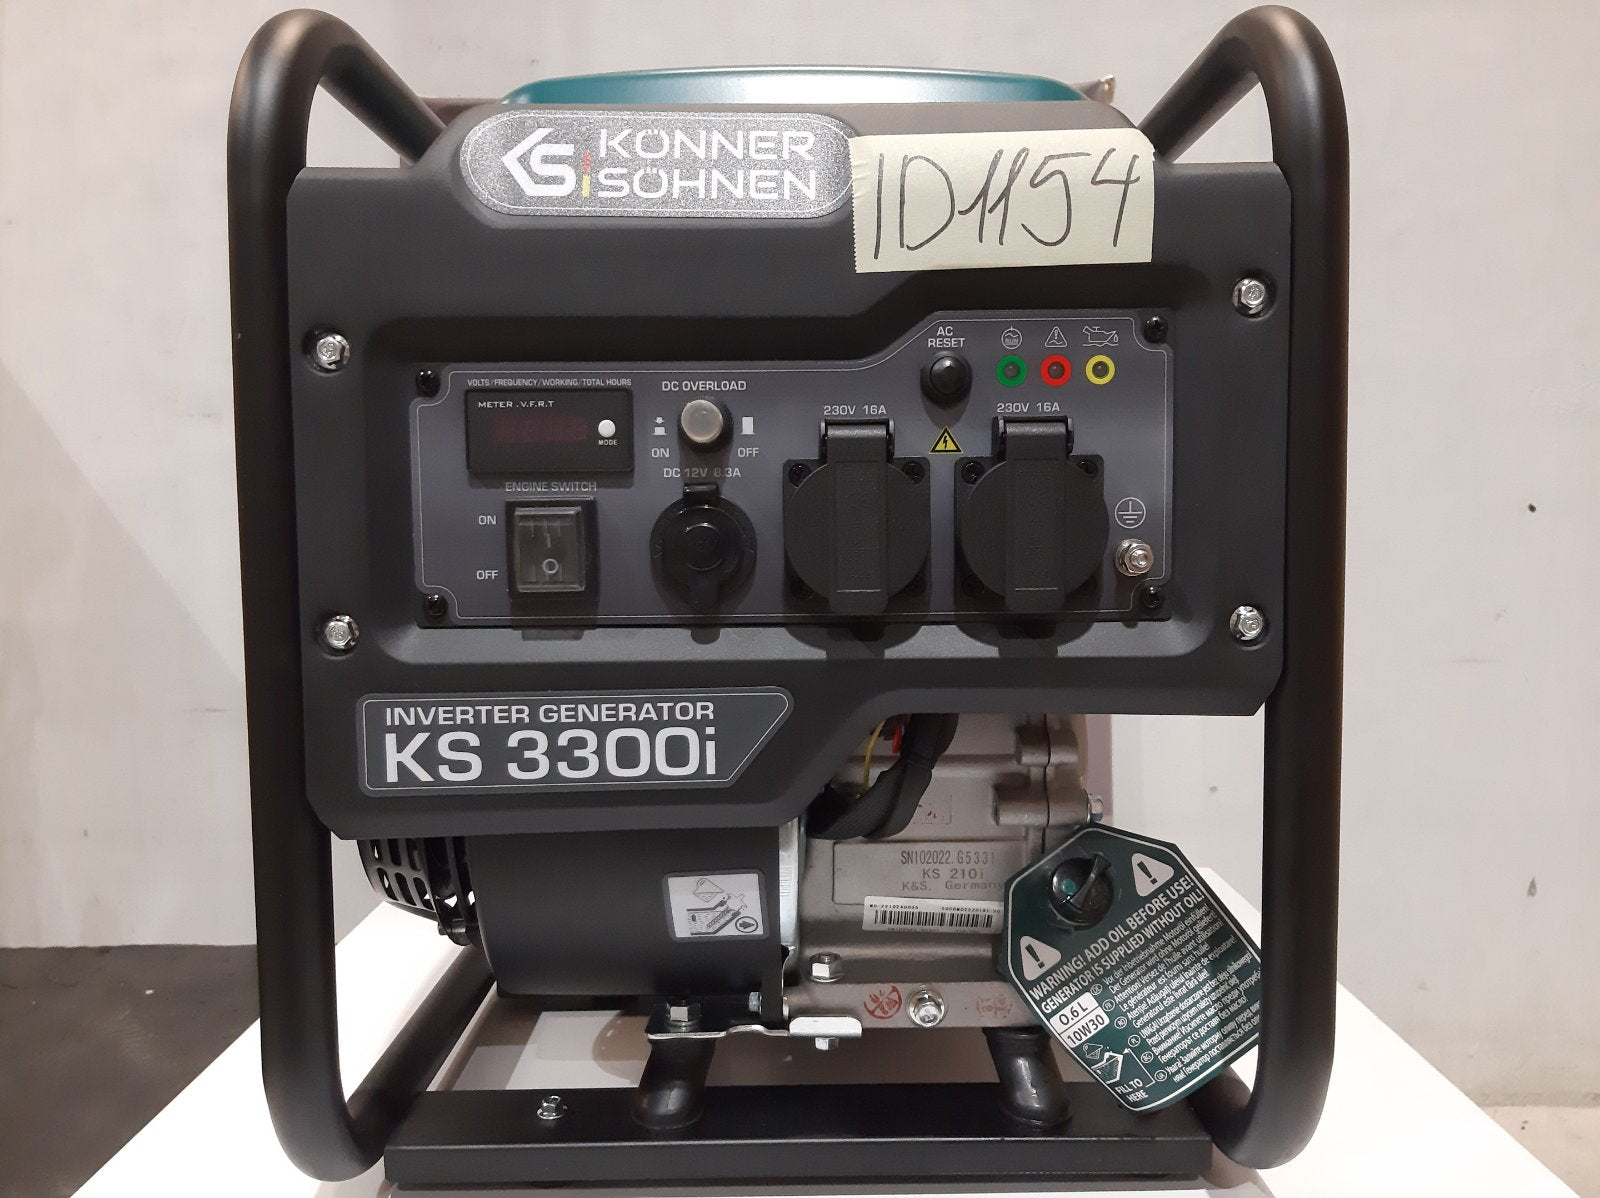 Inverter generator KS 3300i (ID 1154)